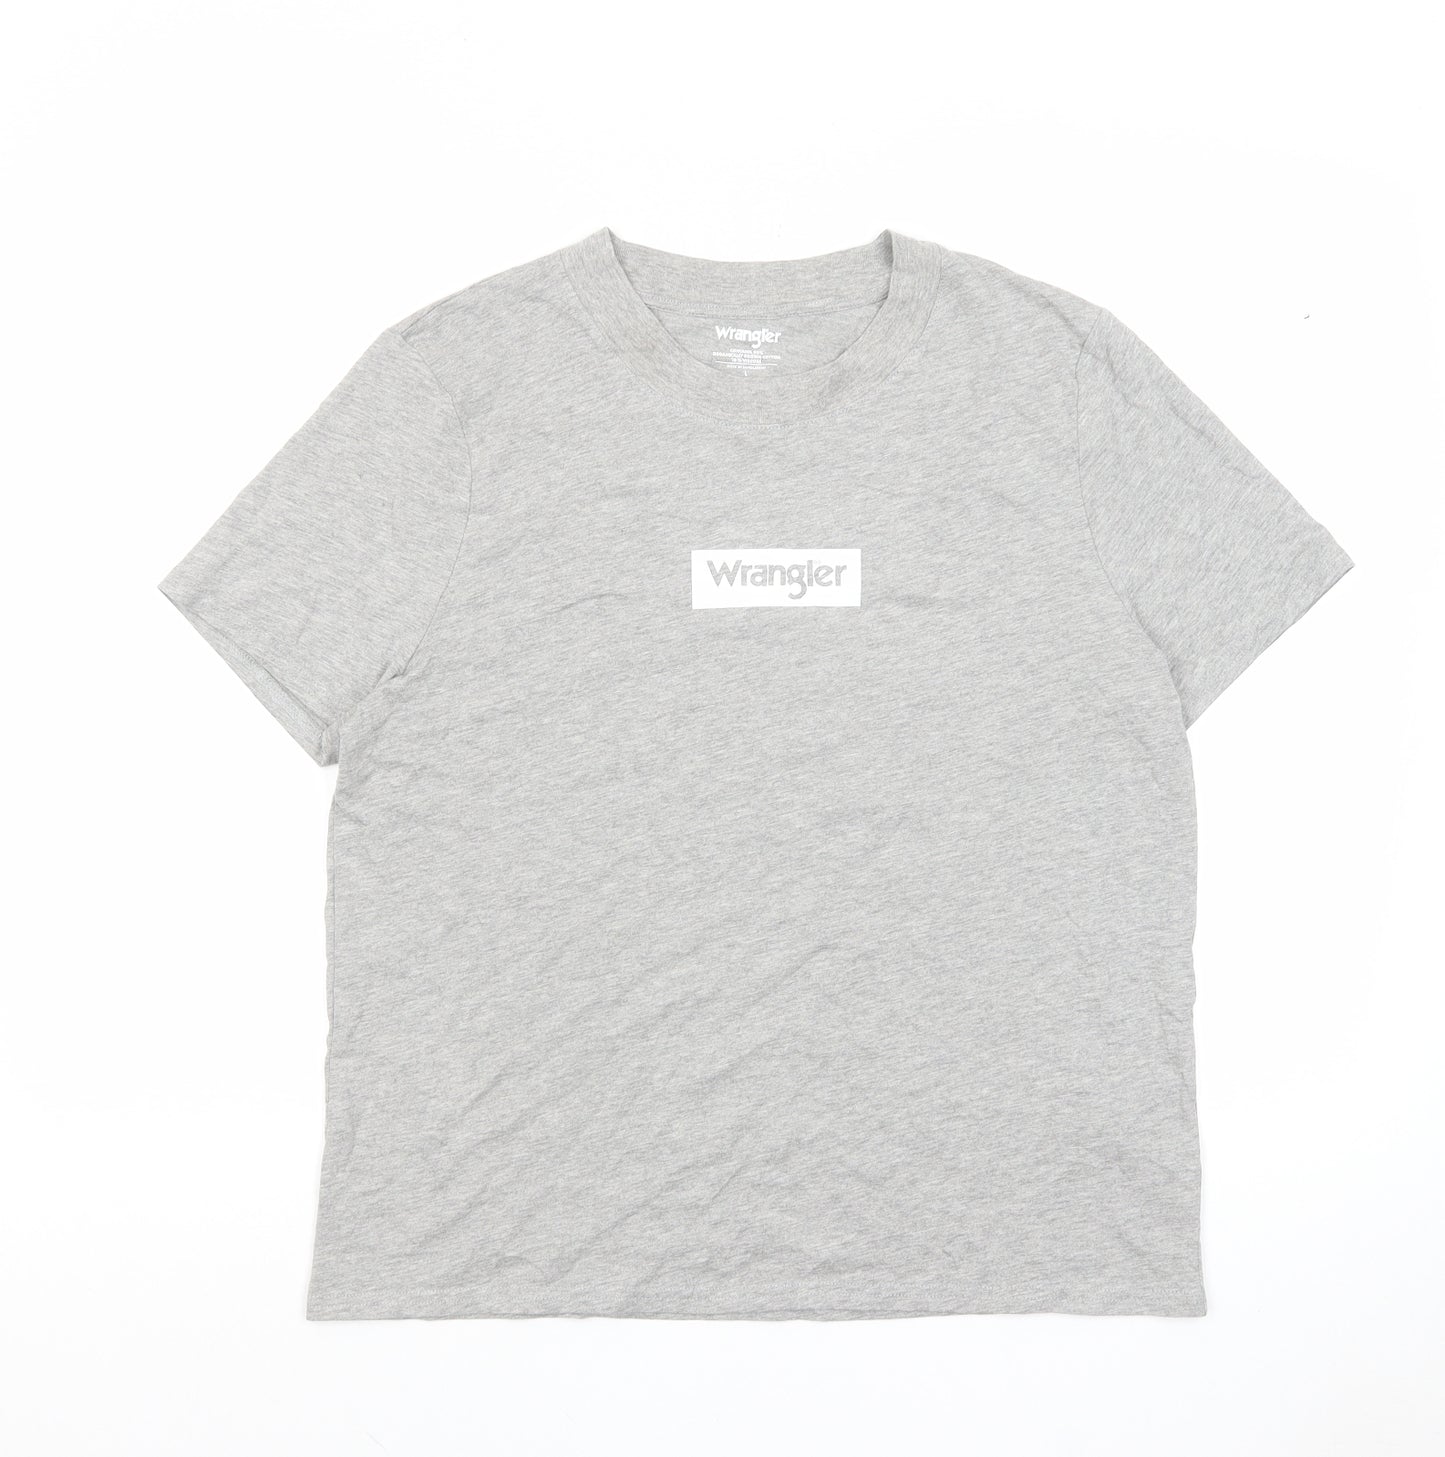 Wrangler Mens Grey Cotton T-Shirt Size L Round Neck